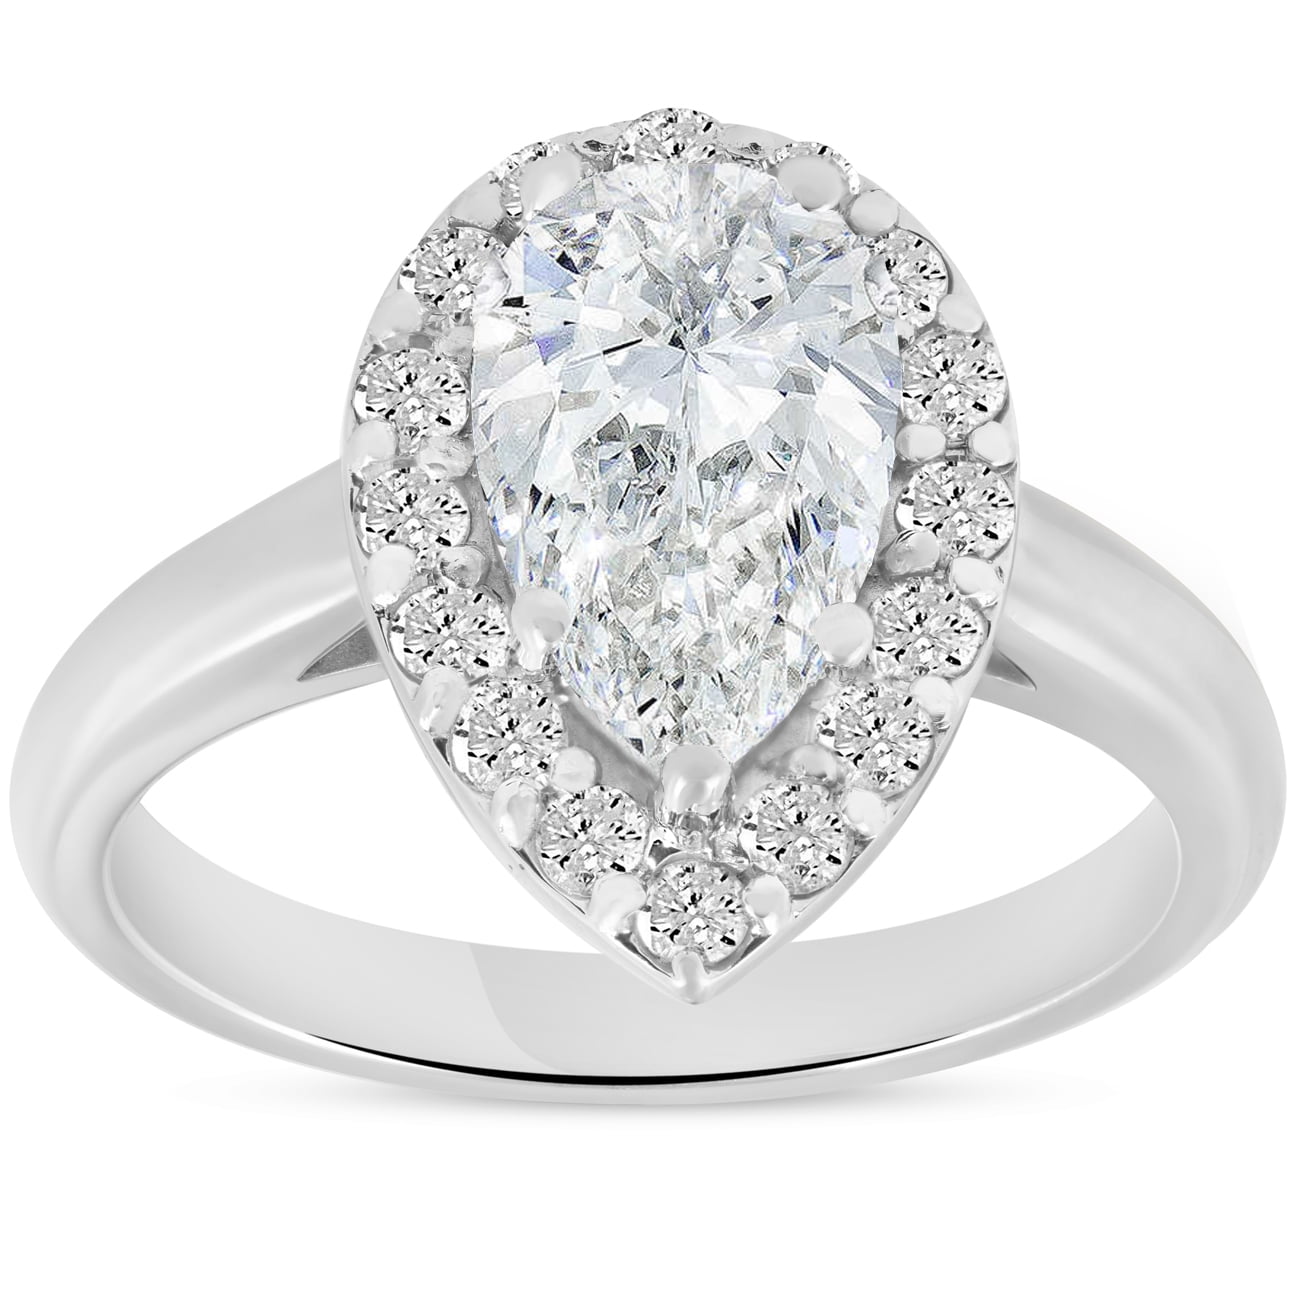 G/SI 1.85 ct Pear Shape Diamond Halo Engagement Ring 14k White Gold